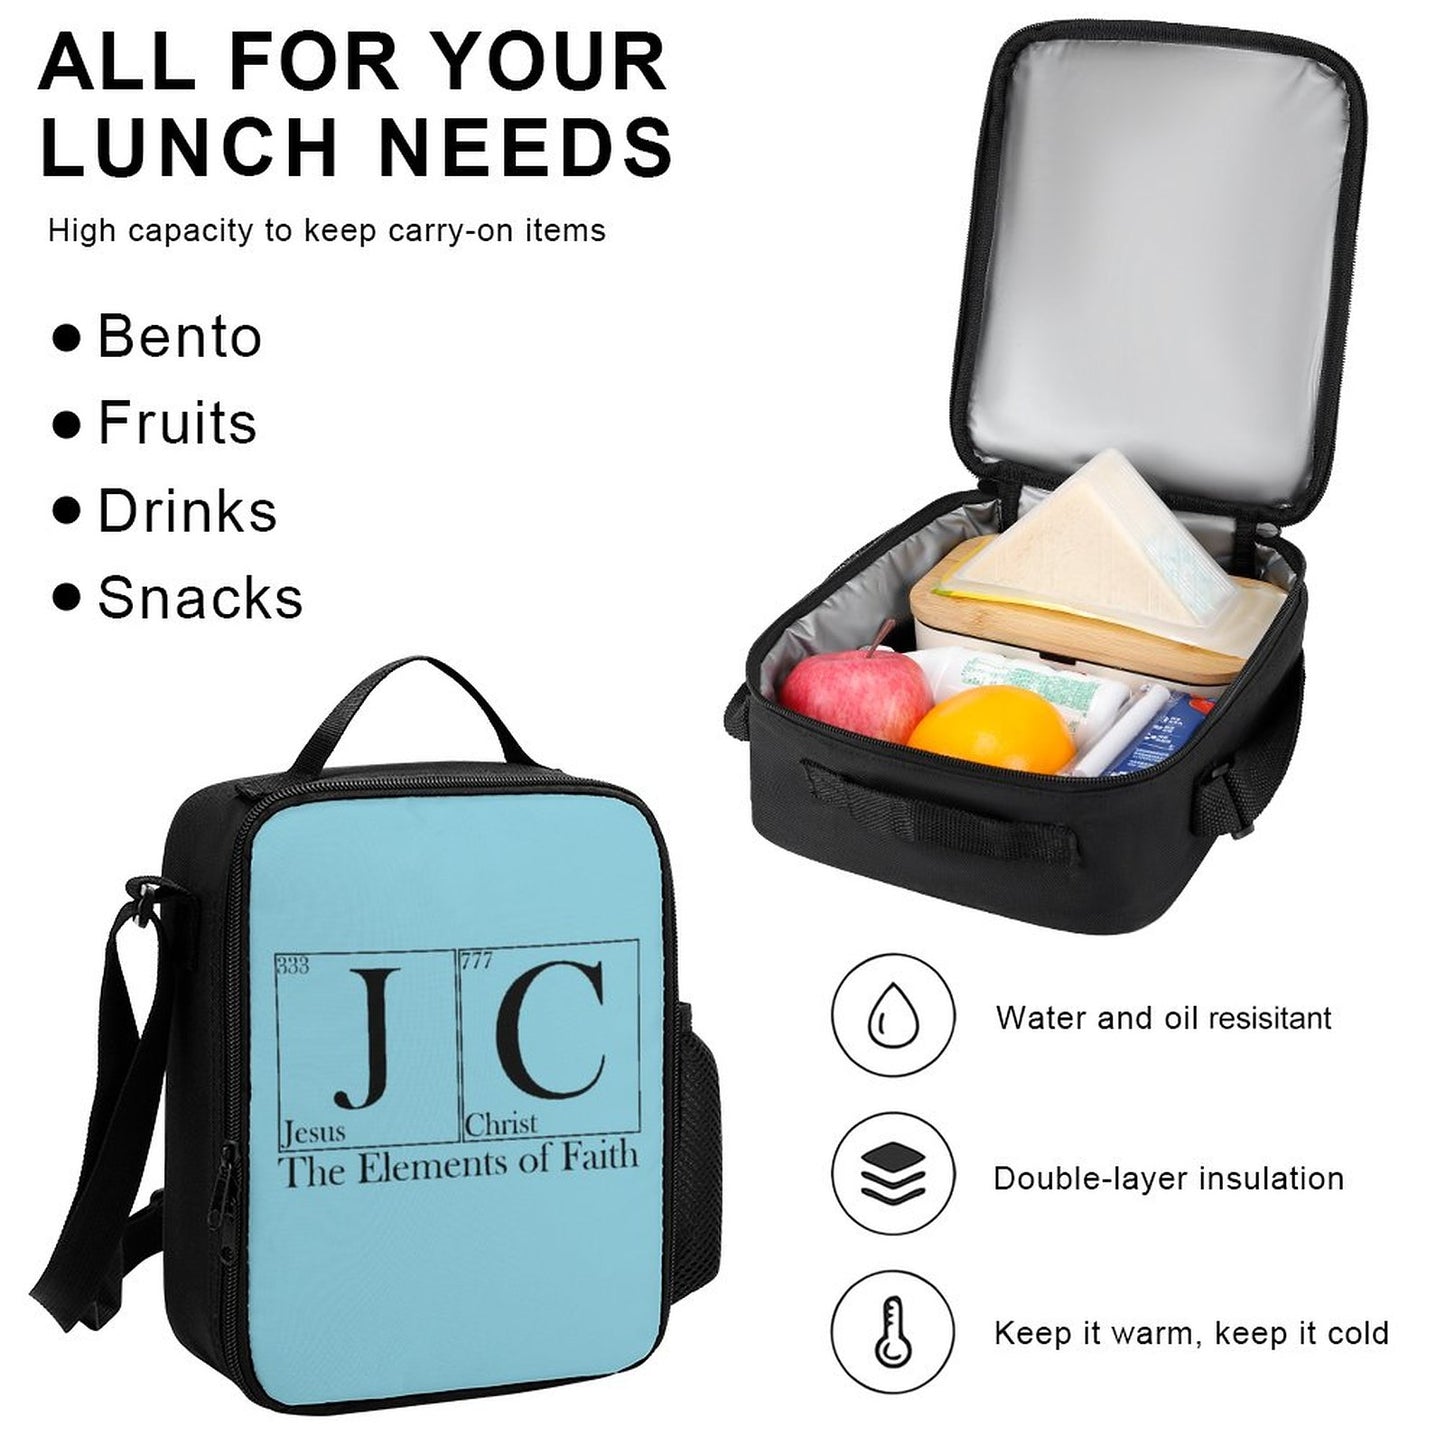 J C JESUS CHRIST The Elements Of Faith Christian Backpack Set of 3 Bags (Shoulder Bag Lunch Bag & Pencil Pouch)